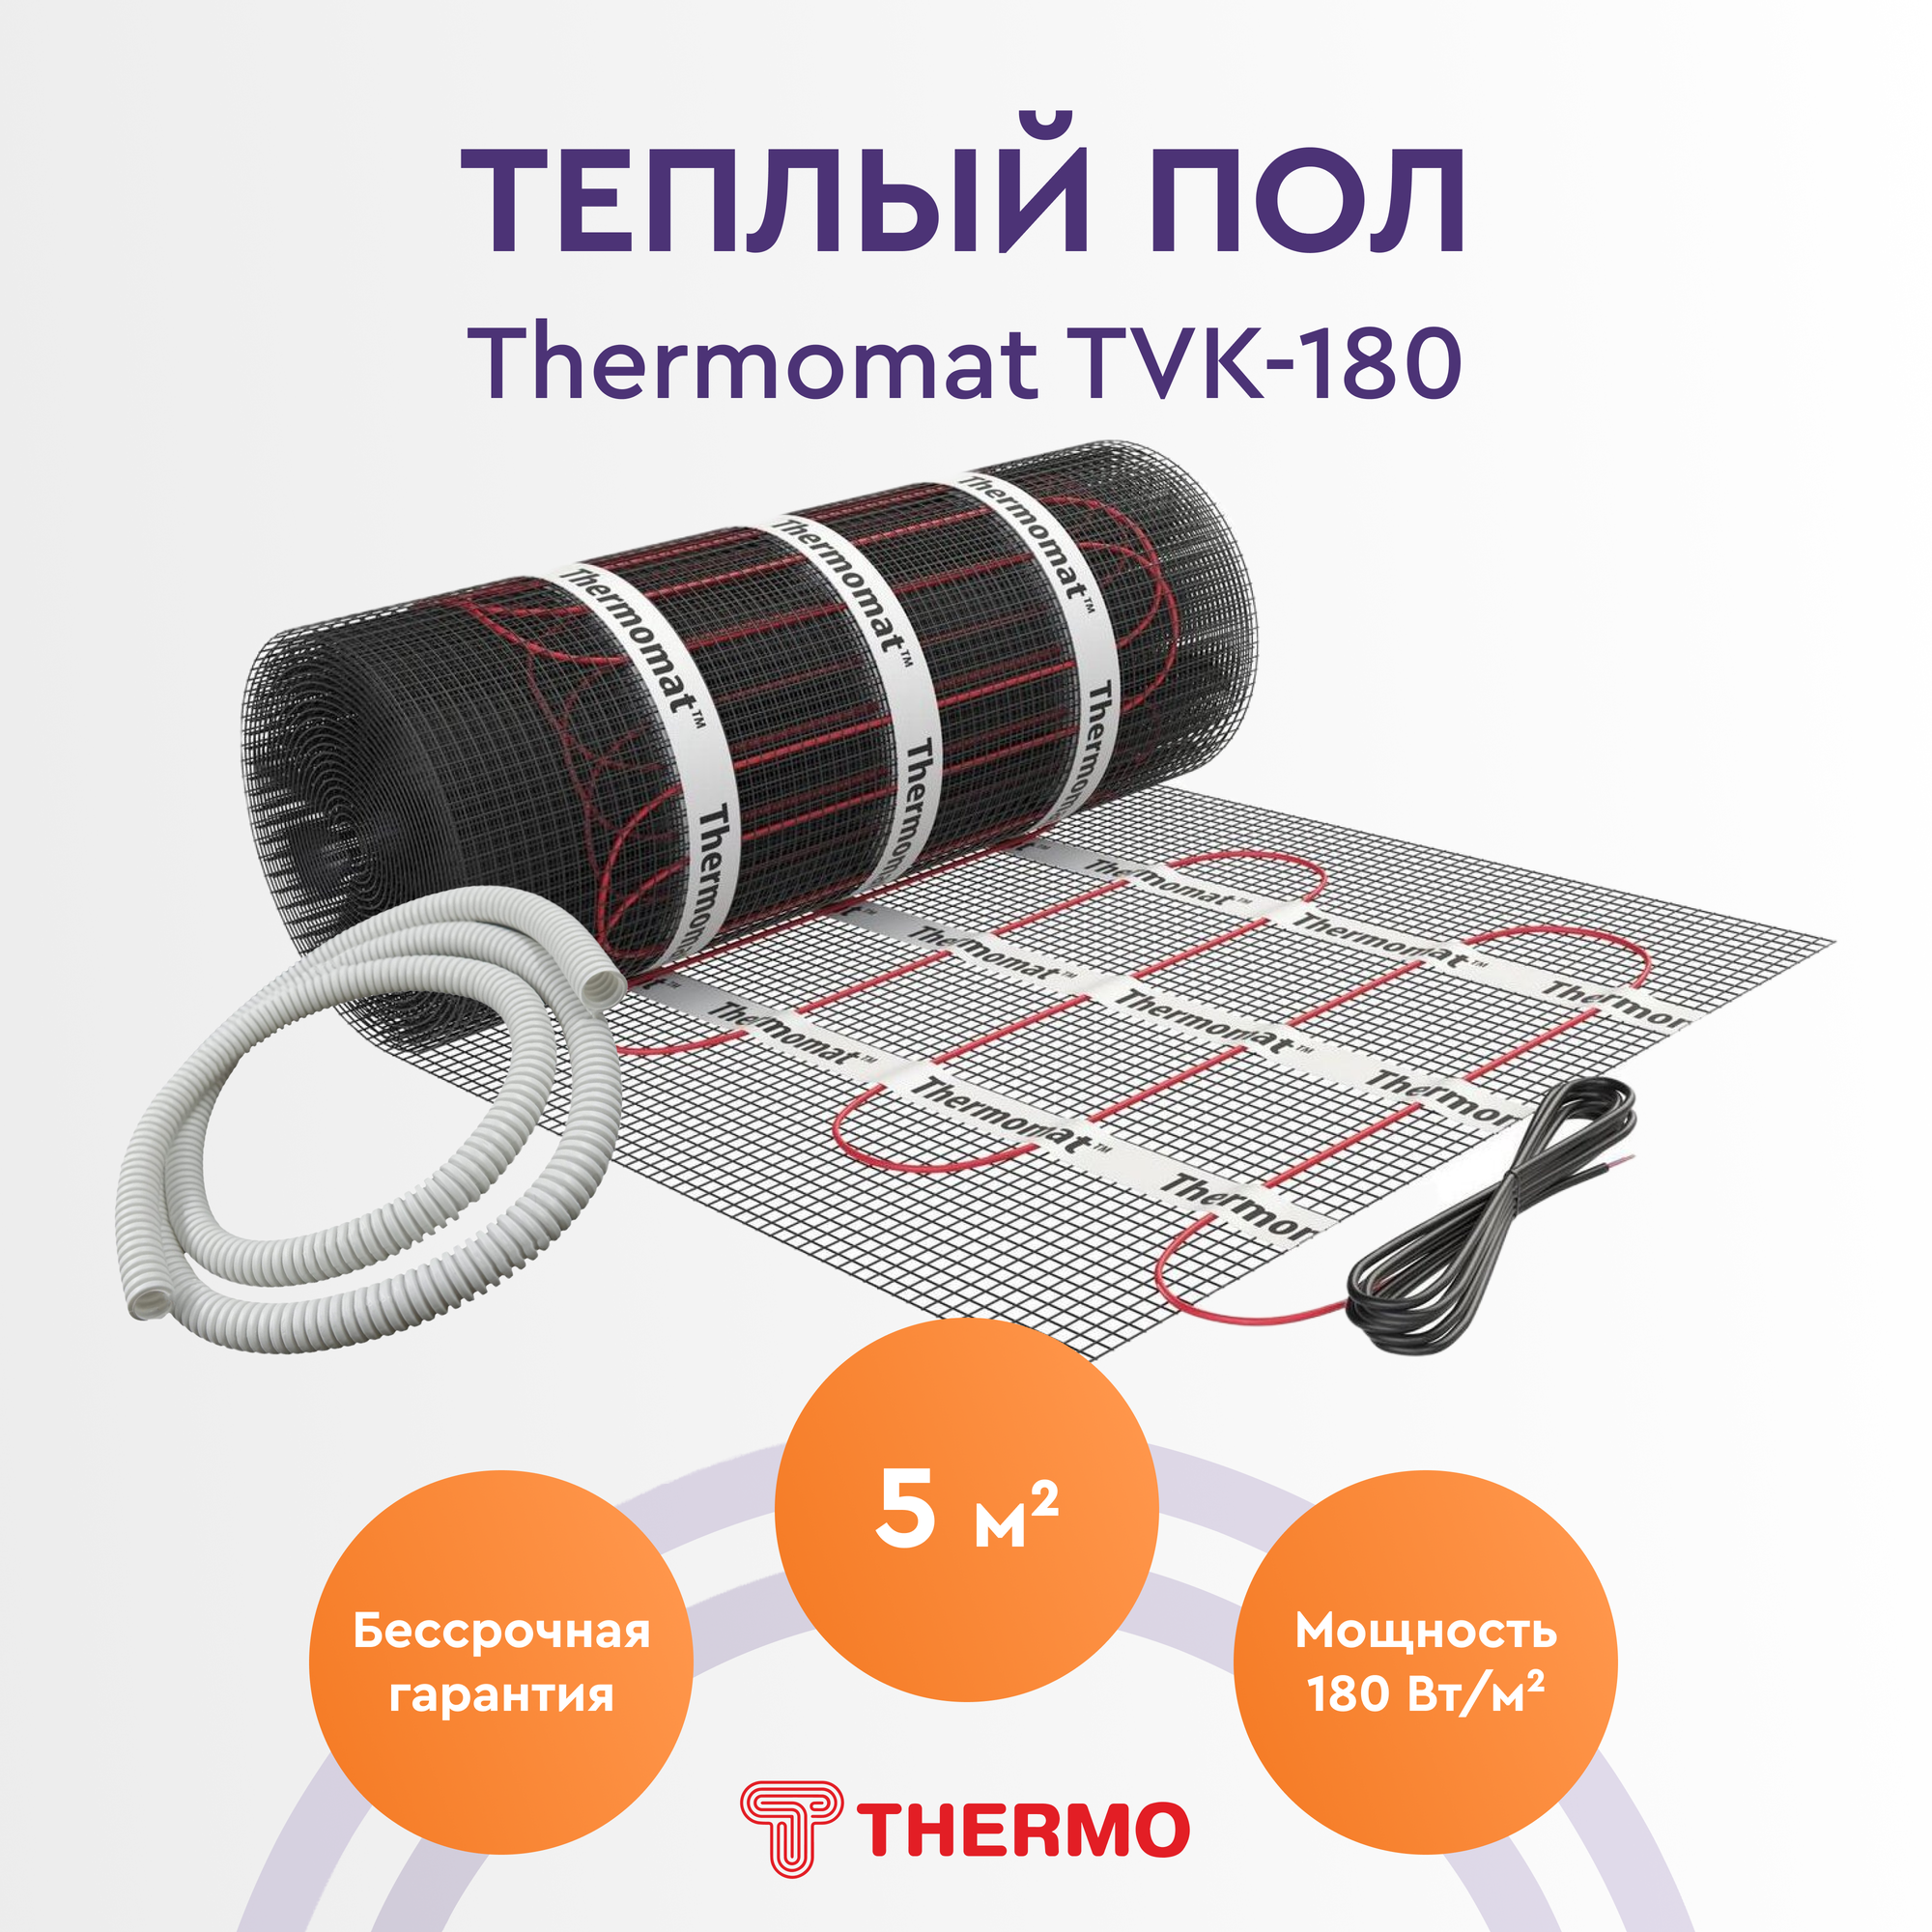 Теплый пол Thermo Thermomat TVK-180 5м. кв.